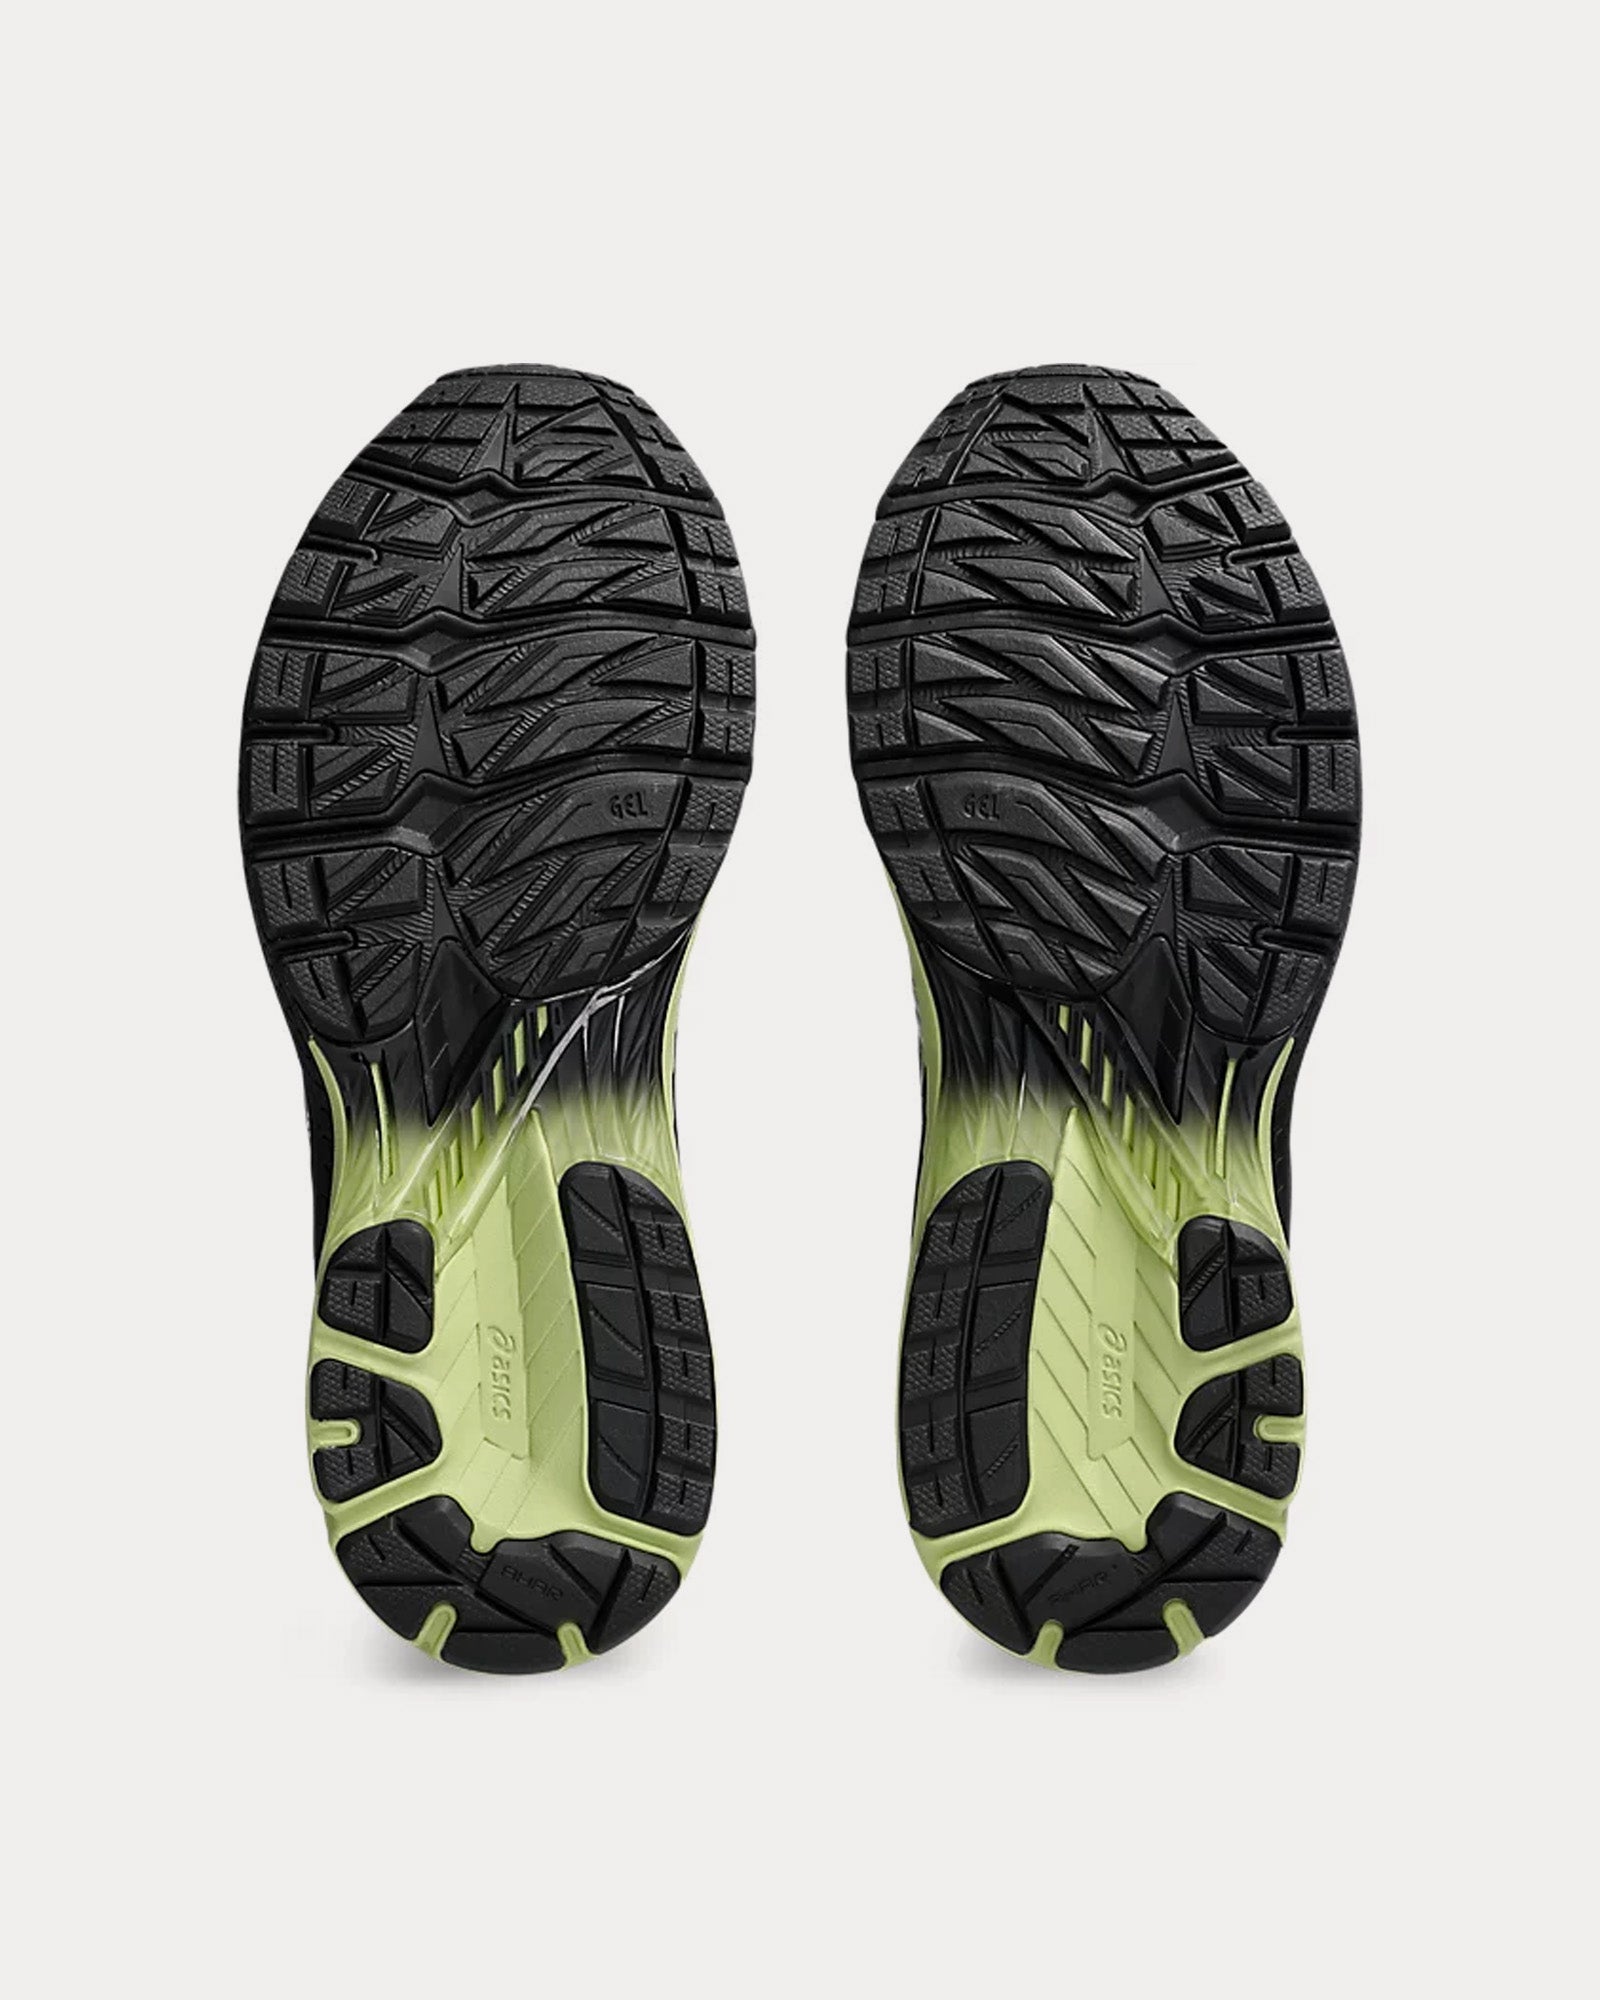 Asics x Kiko Kostadinov - US4-S Gel-Terrain Black / Neon Lime Low Top Sneakers